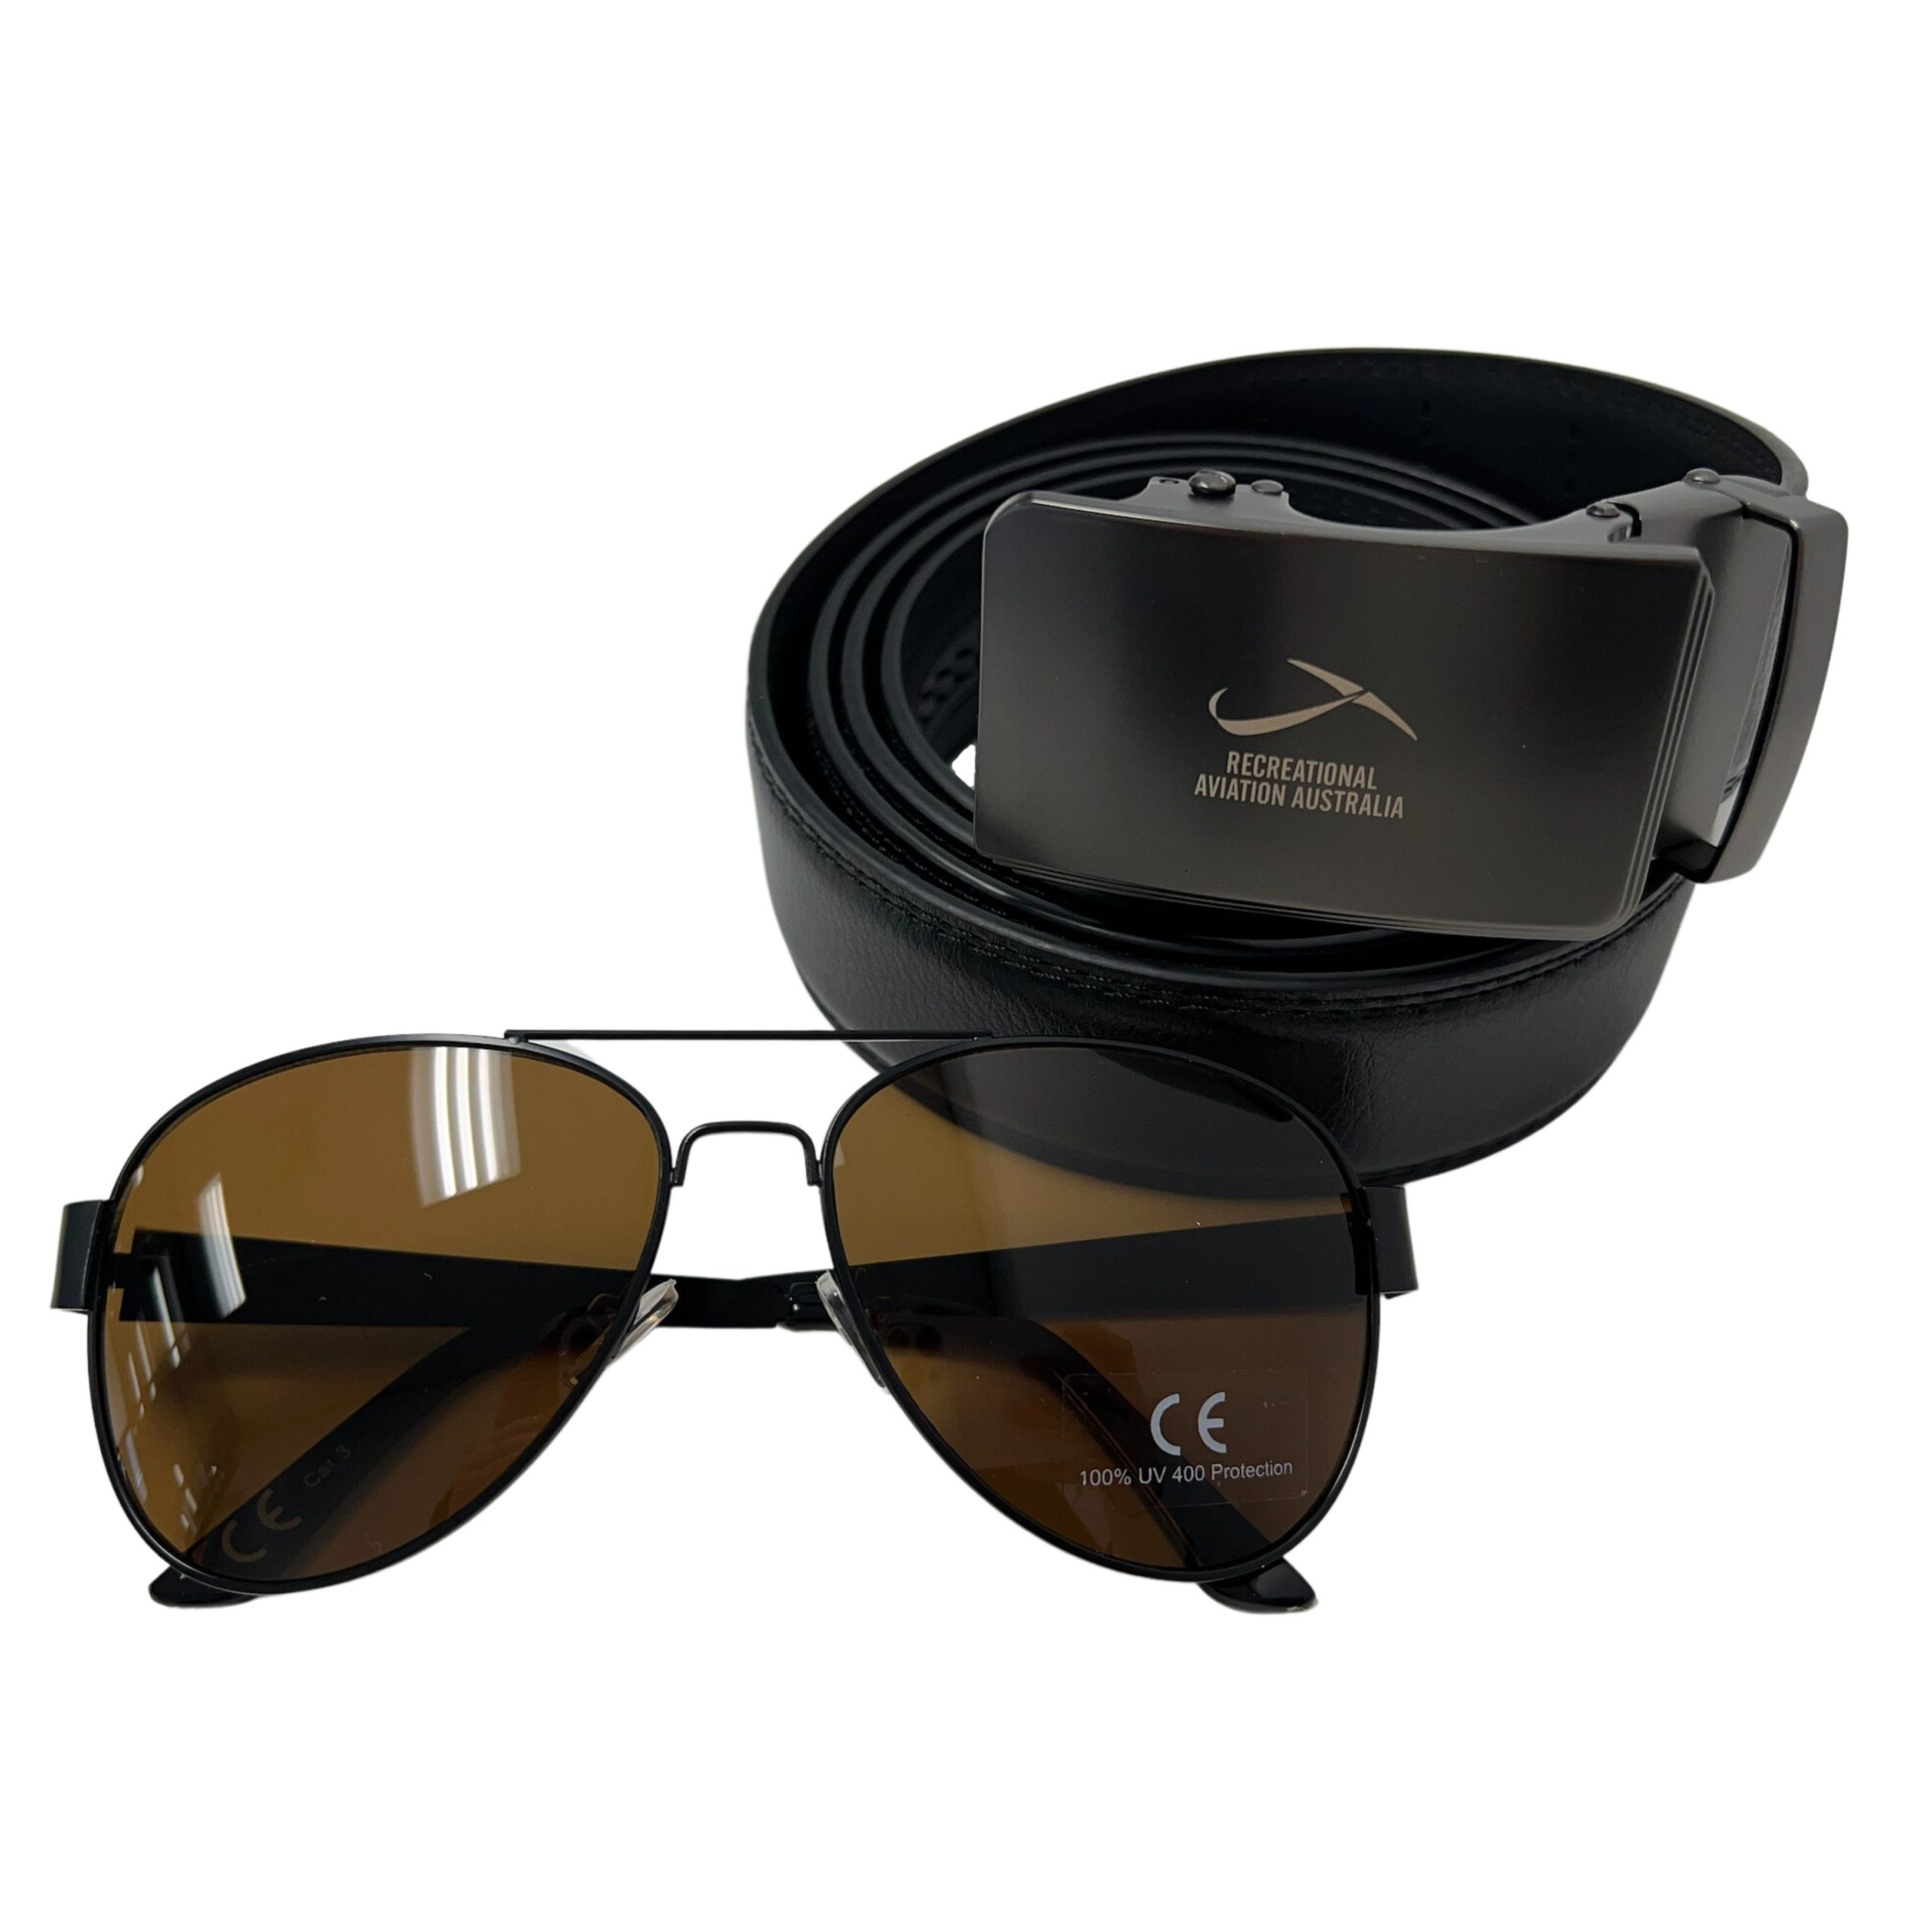 Aviator Sunglasses and Belt Combo